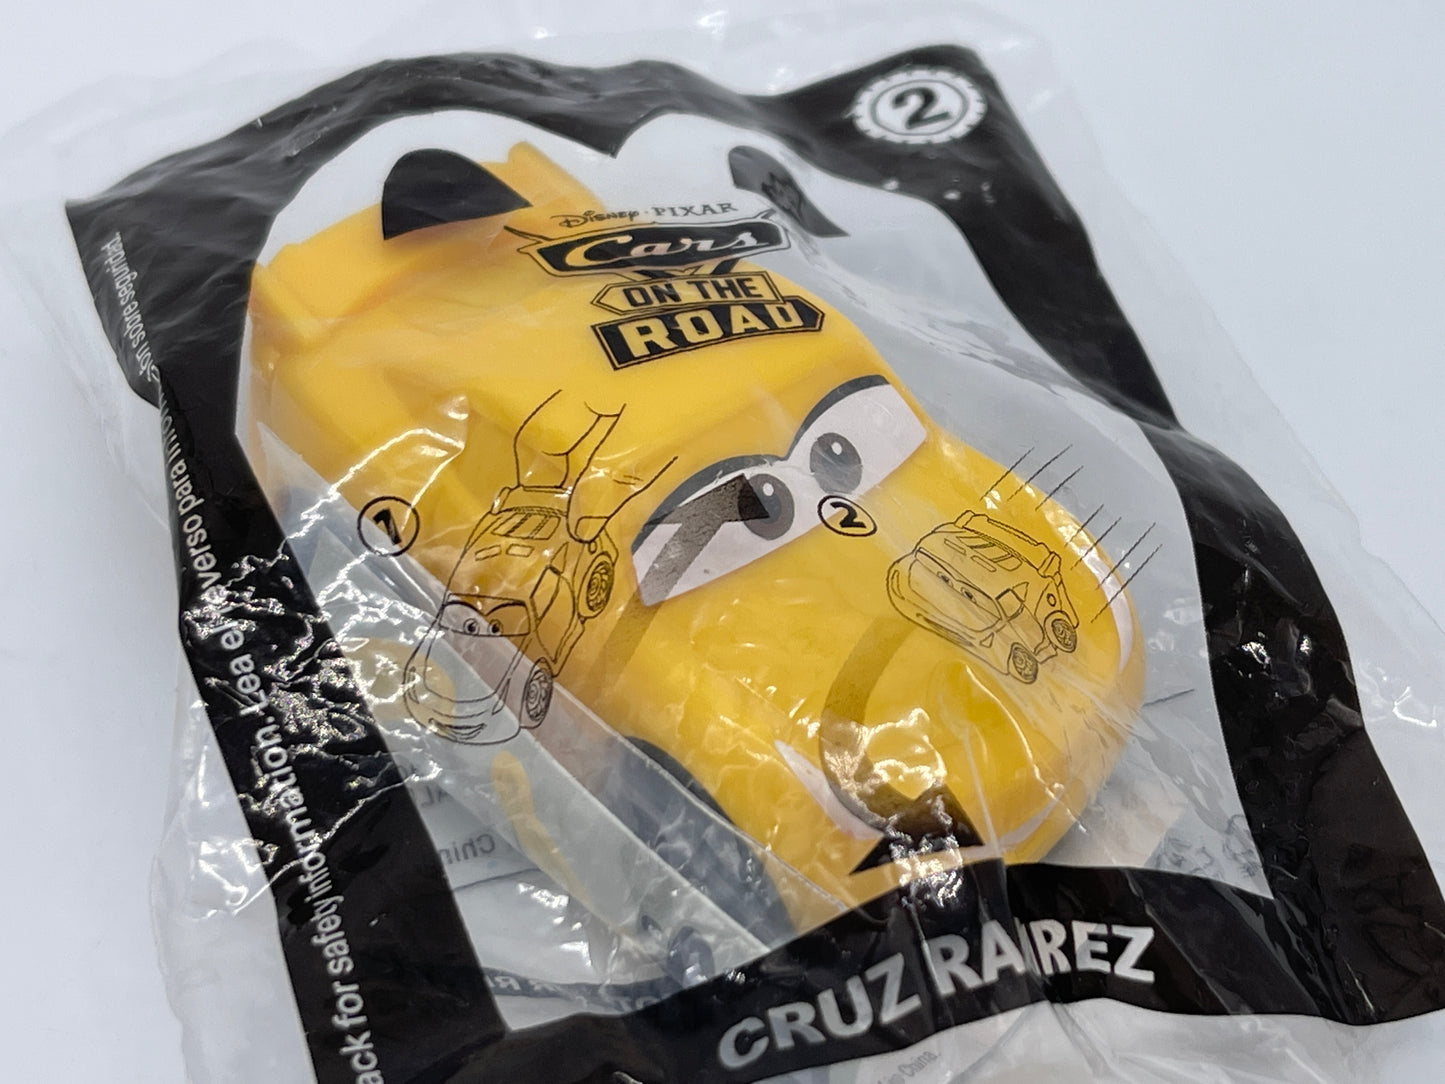 Cars on the Road "Cruz Ramirez" Mc Donalds Junior Bag Happy Meal USA 2022 